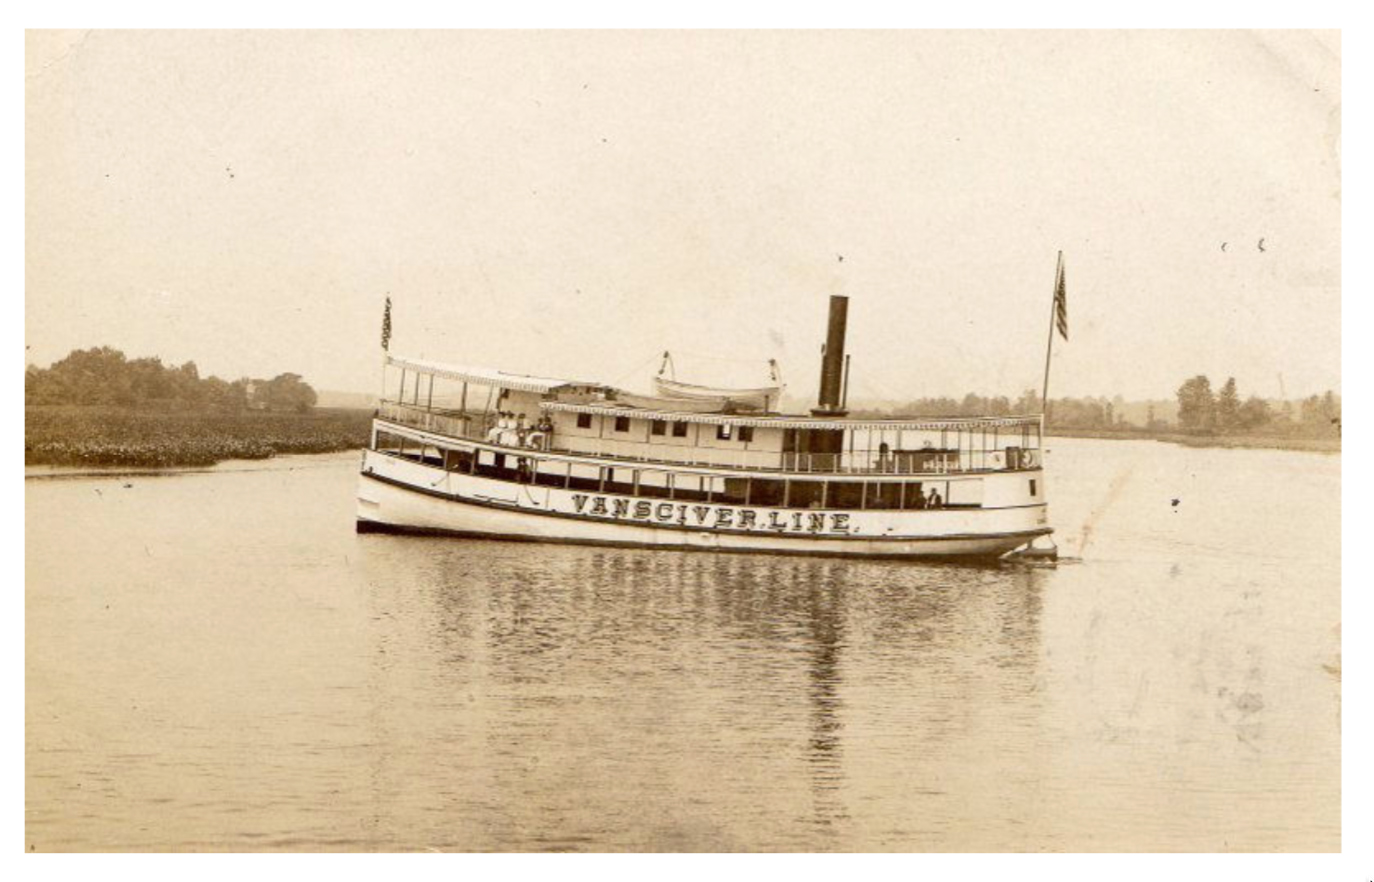 Riverside - VanSciver Line steam boat passing by off shore in the Delaware - c 1910